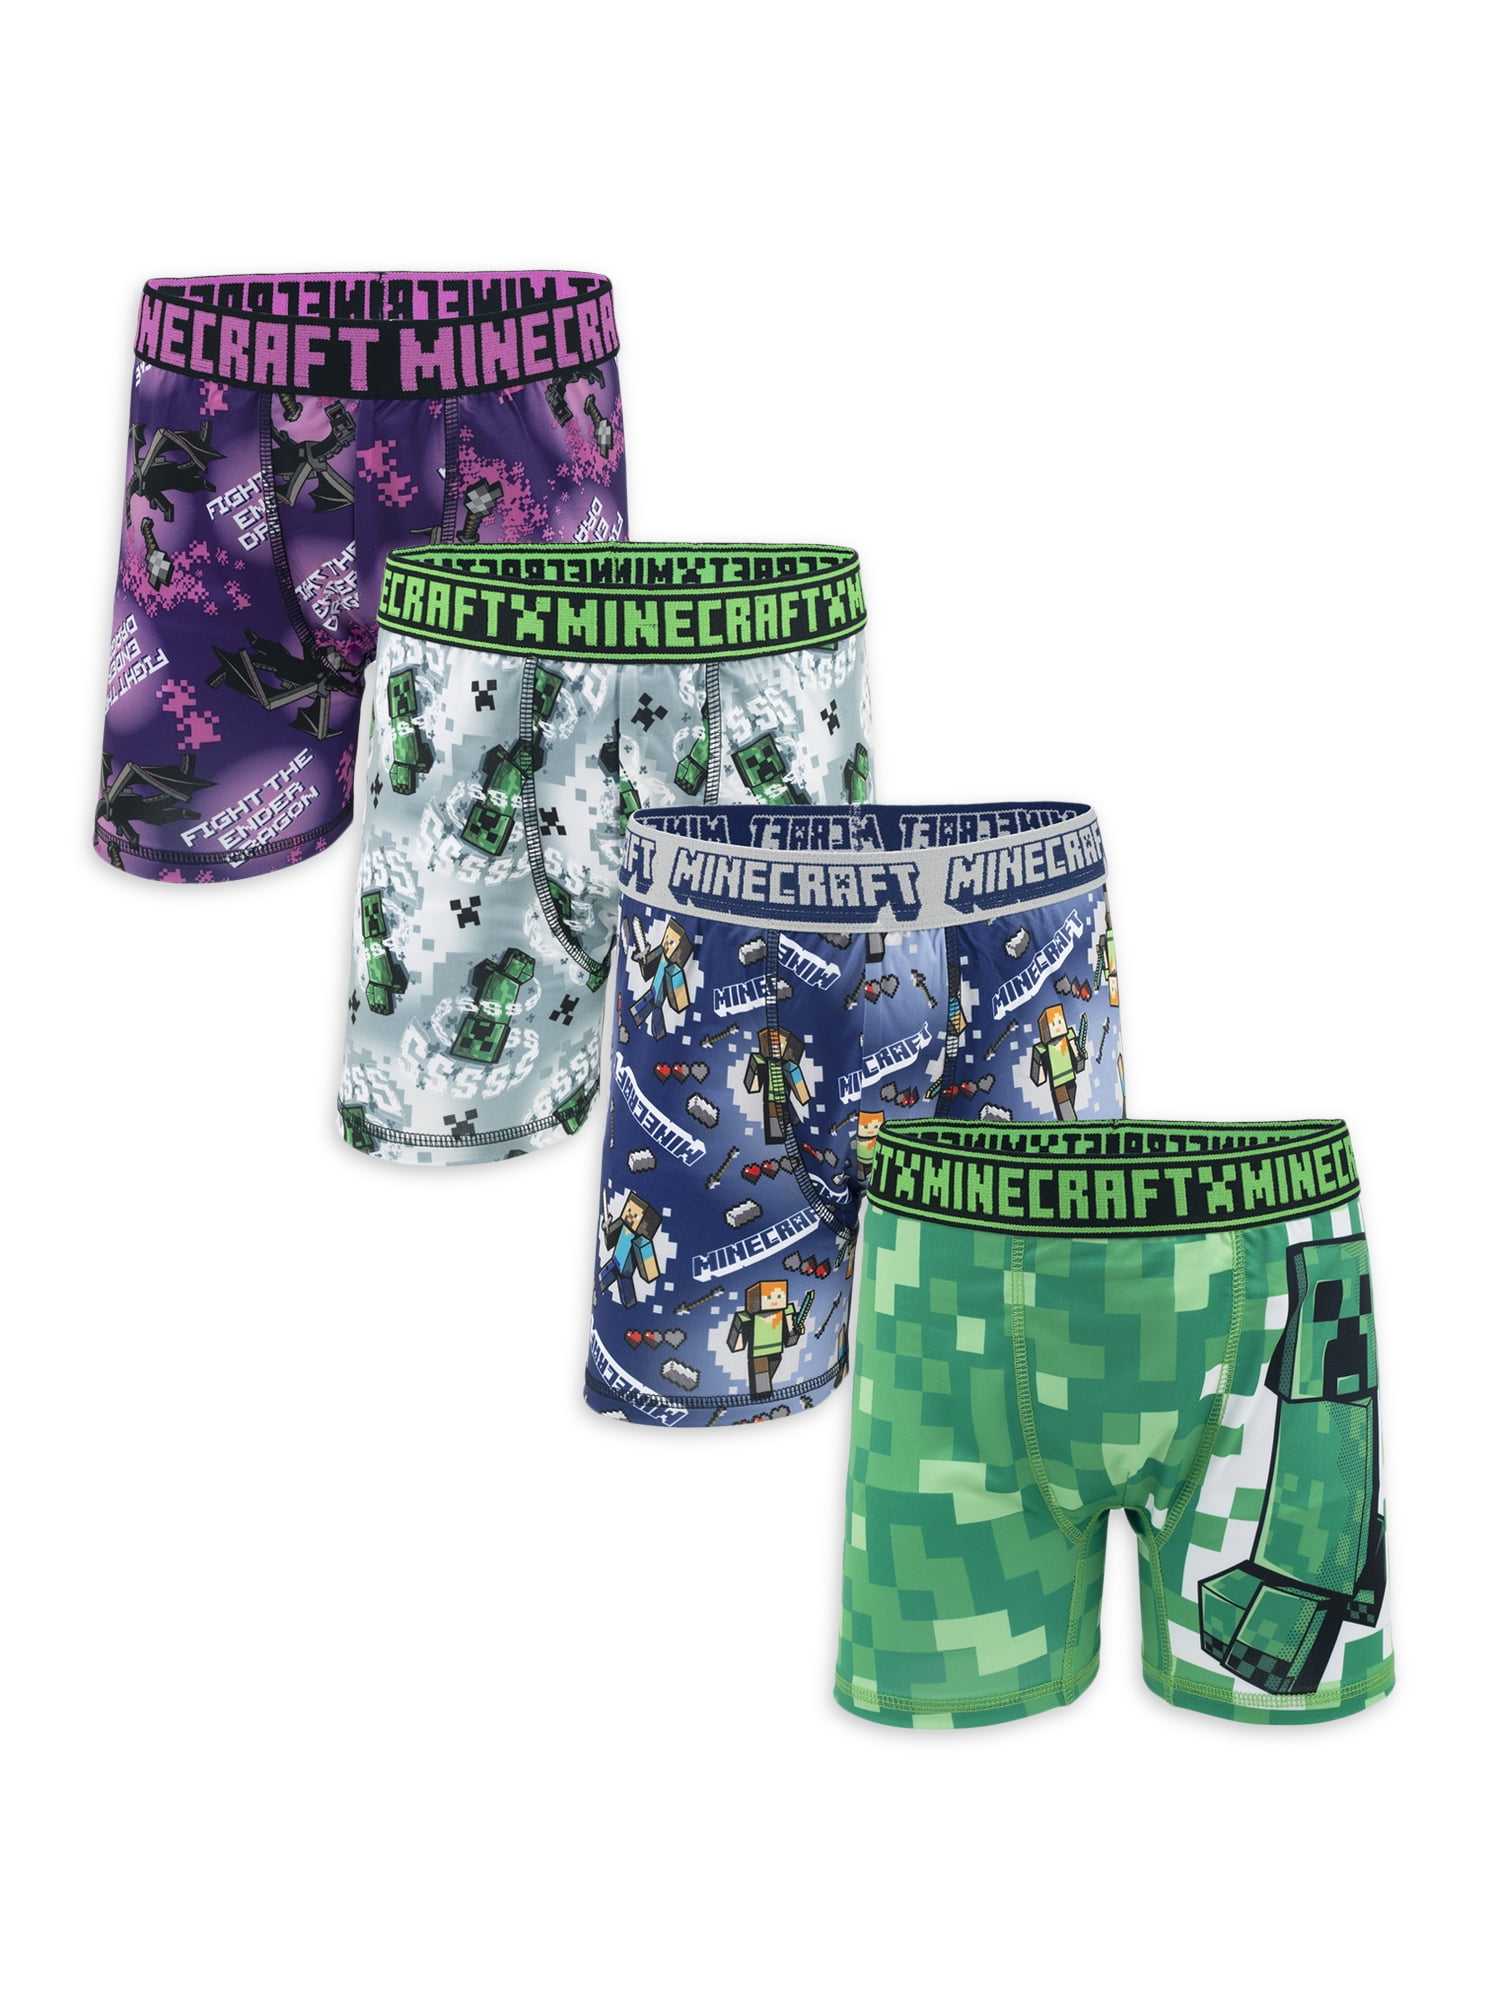 sarcia.eu 2 x Minecraft Grey/Black Trunk Fit Boxers Underwear for Boys 